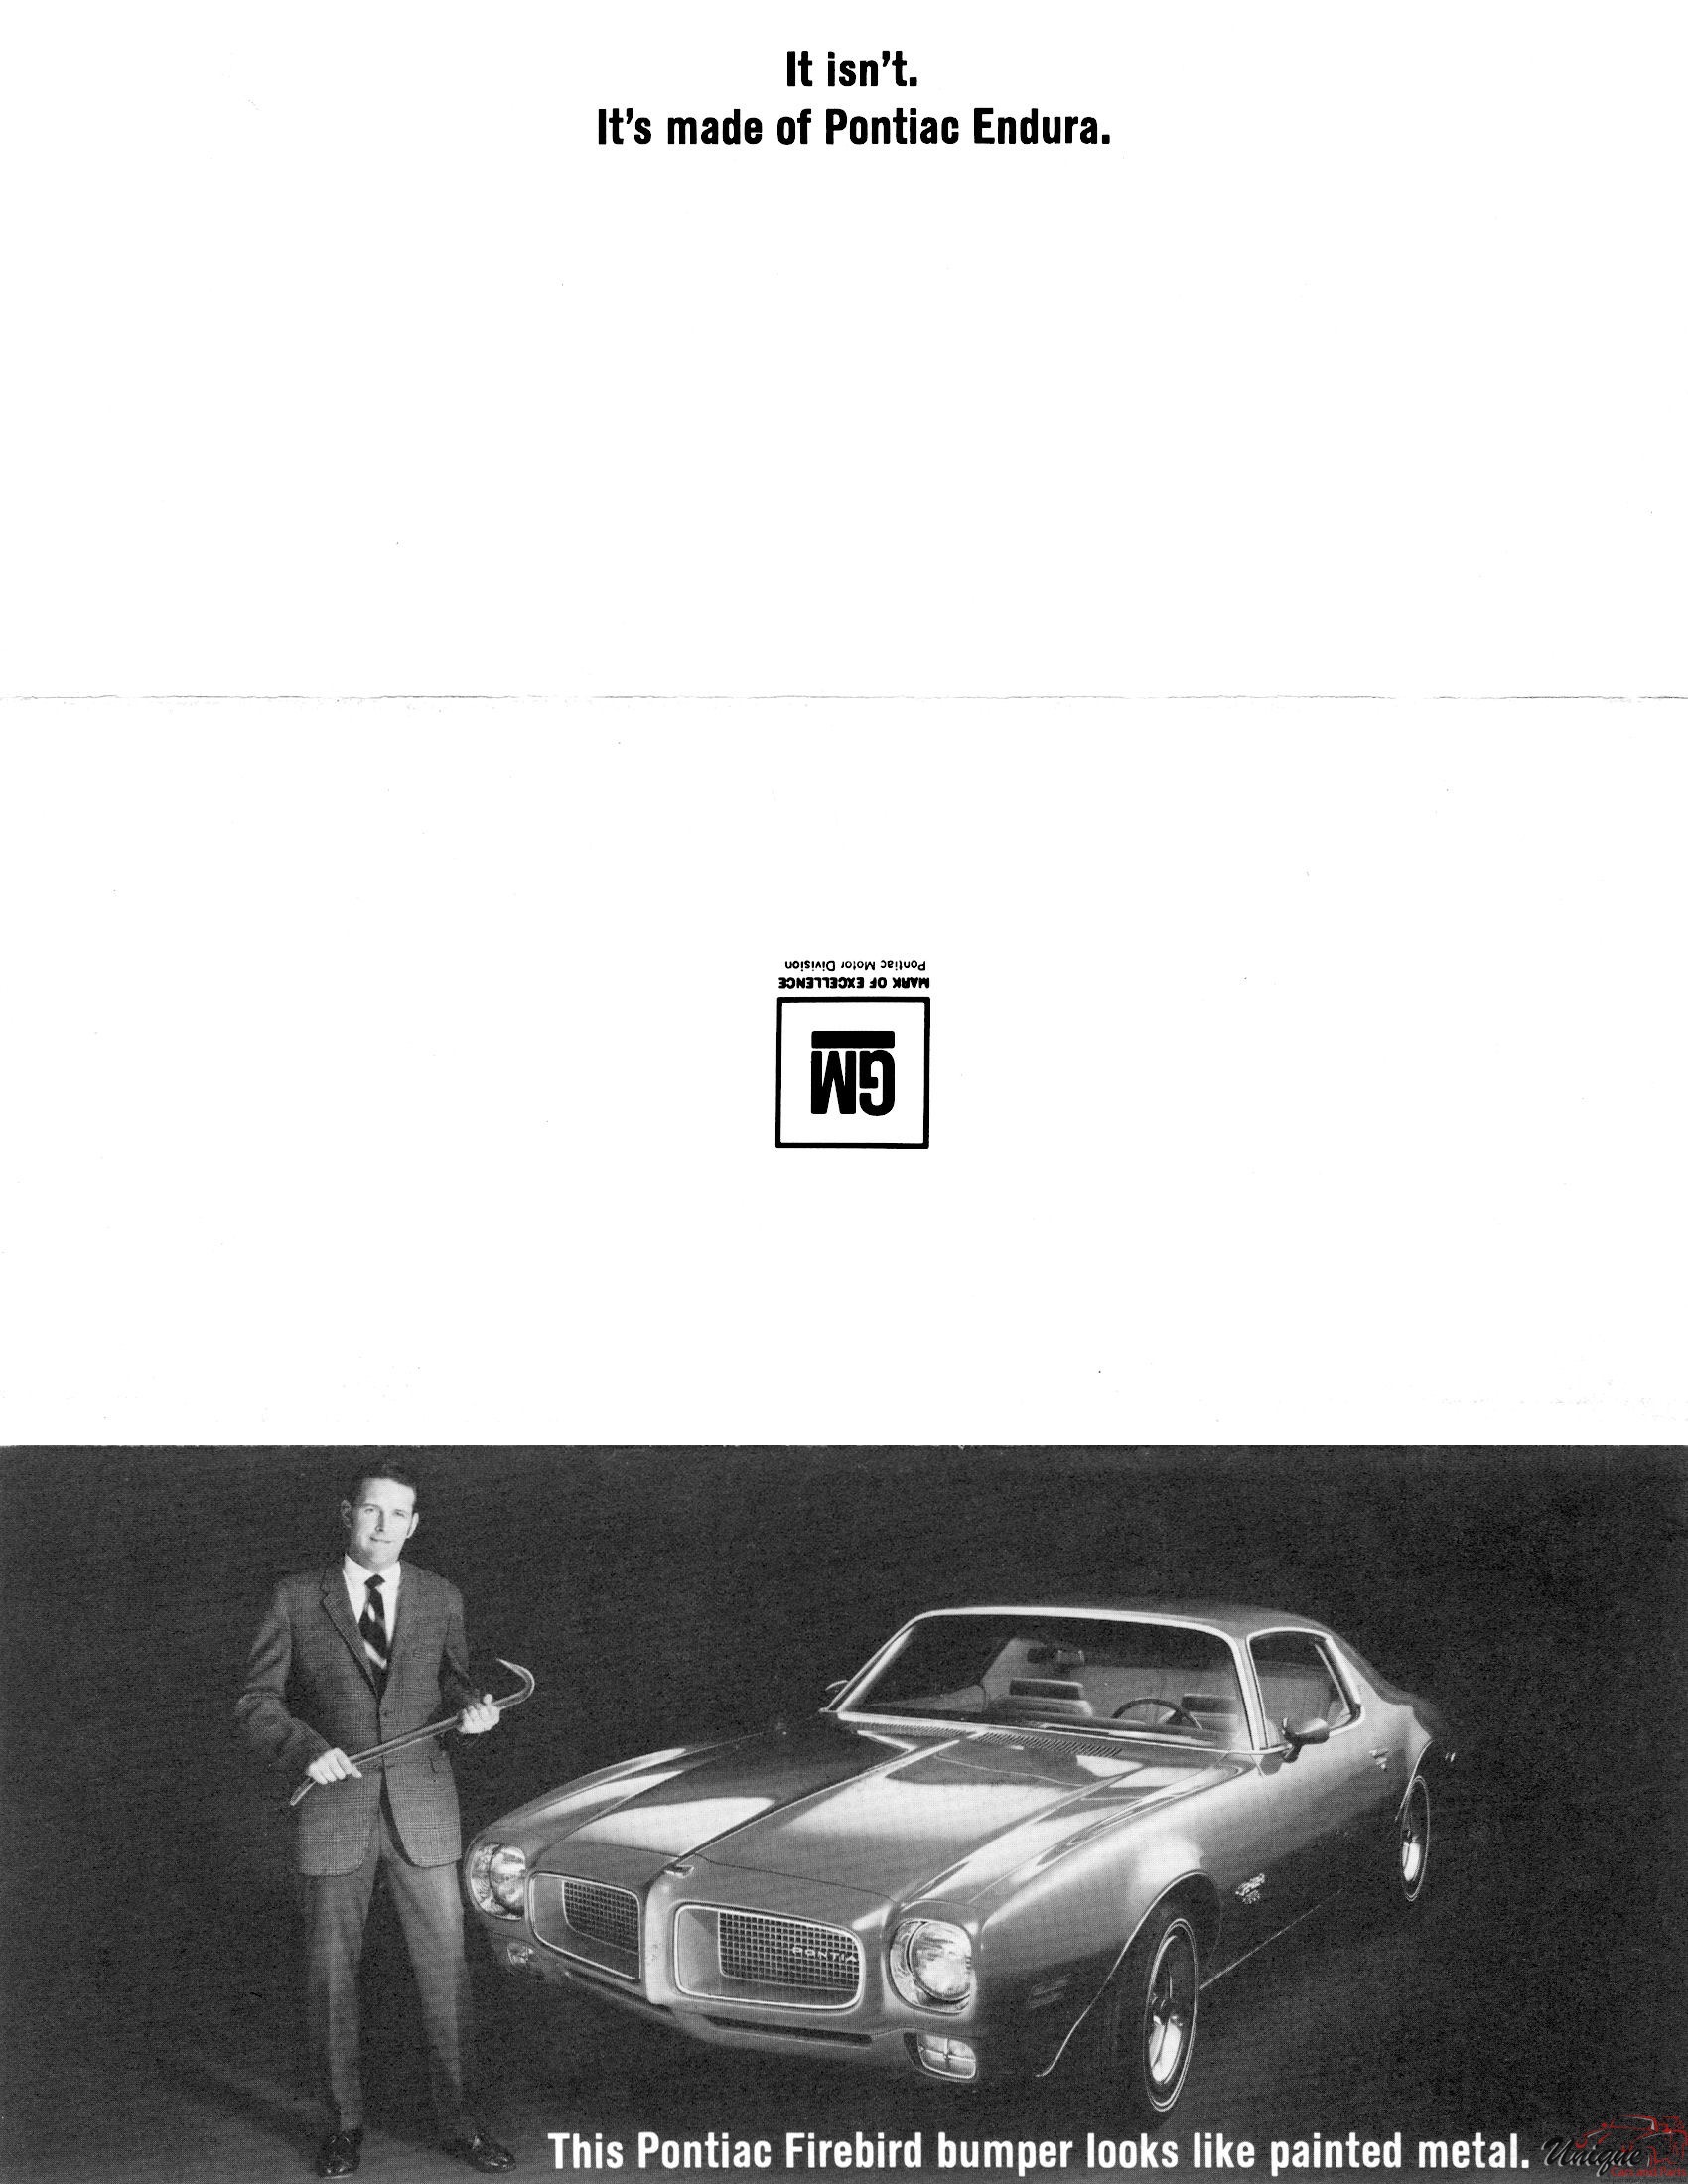 1970 Canadian Pontiac Firebird Folder